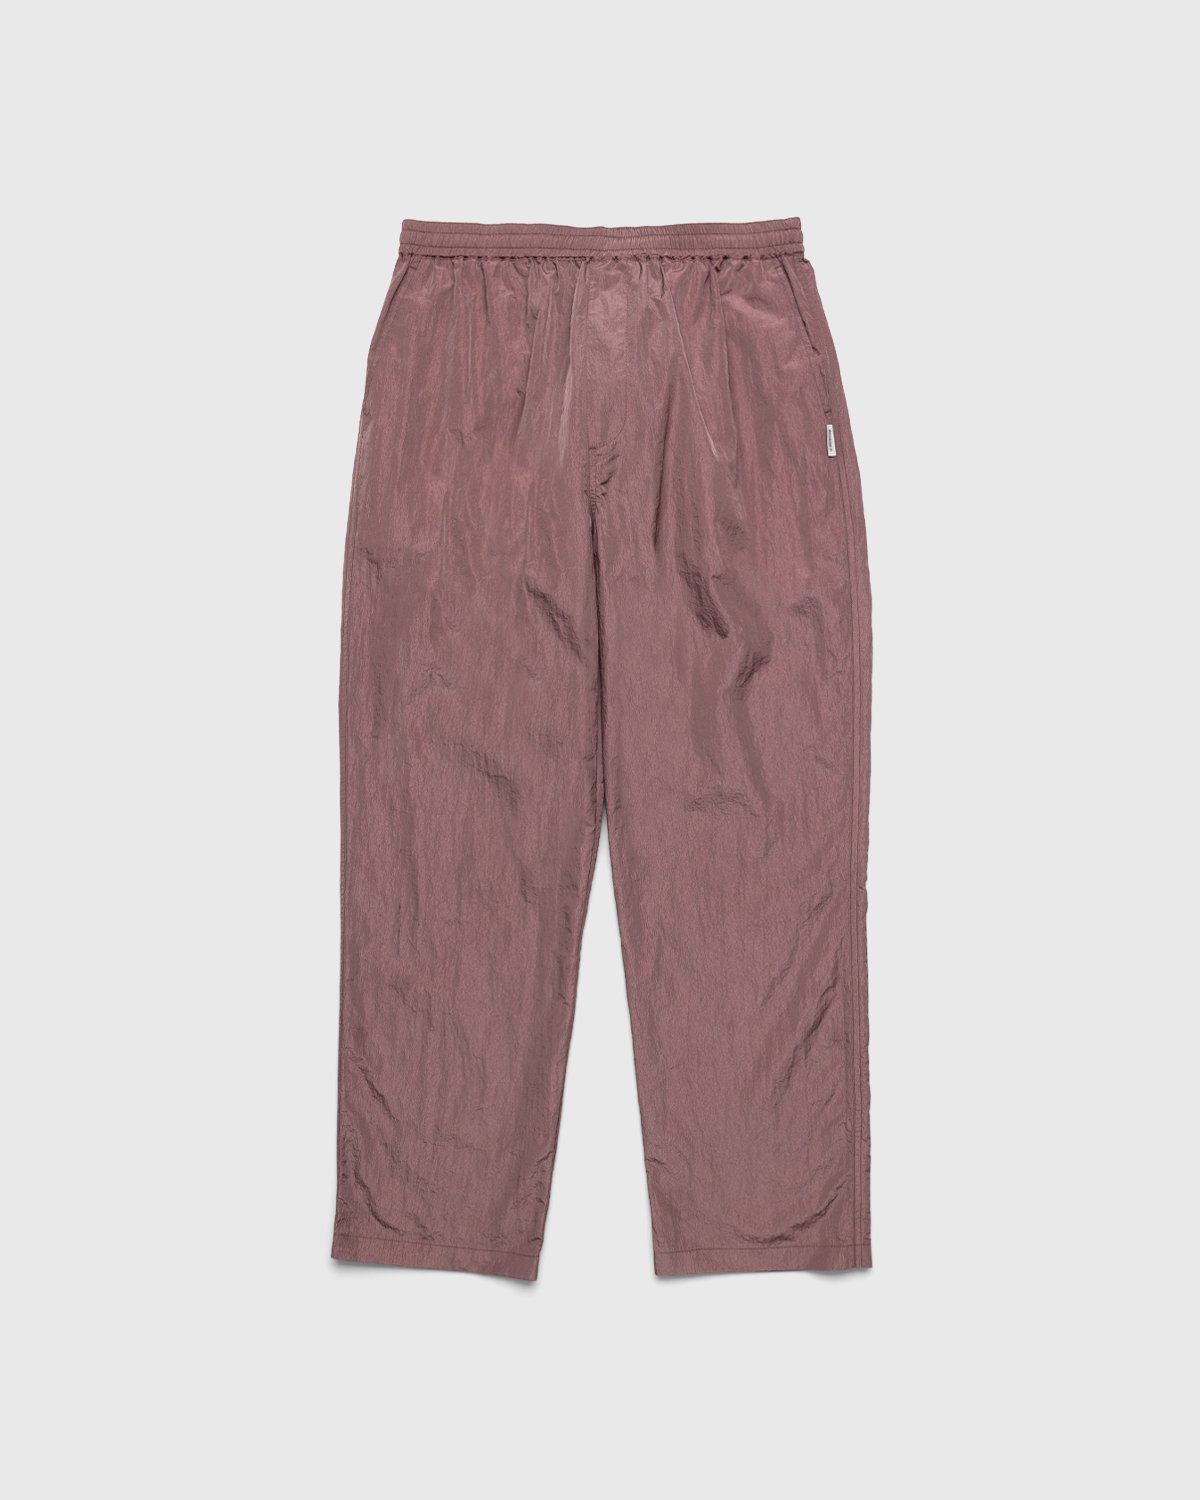 Highsnobiety – Crepe Nylon Elastic Pants Rose Gold - Active Pants - Pink - Image 1